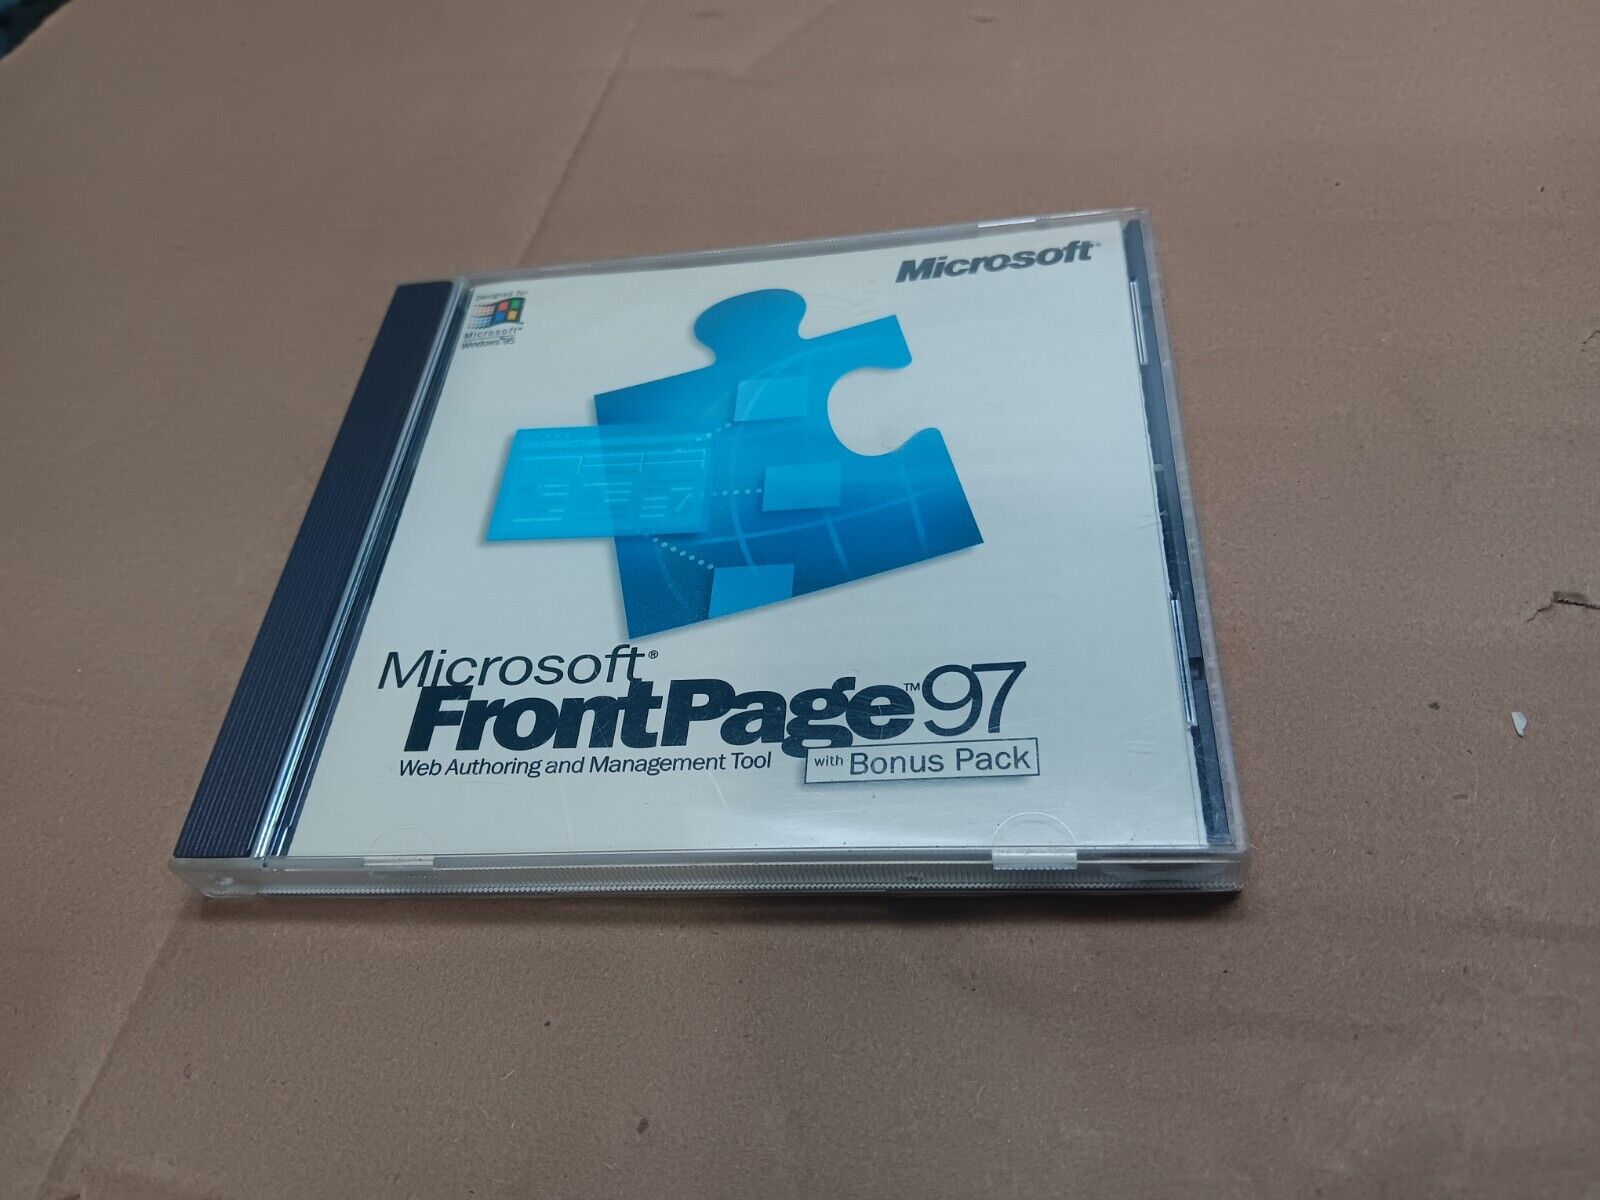 Vintage Microsoft FrontPage 97 with Bonus & product CD Key